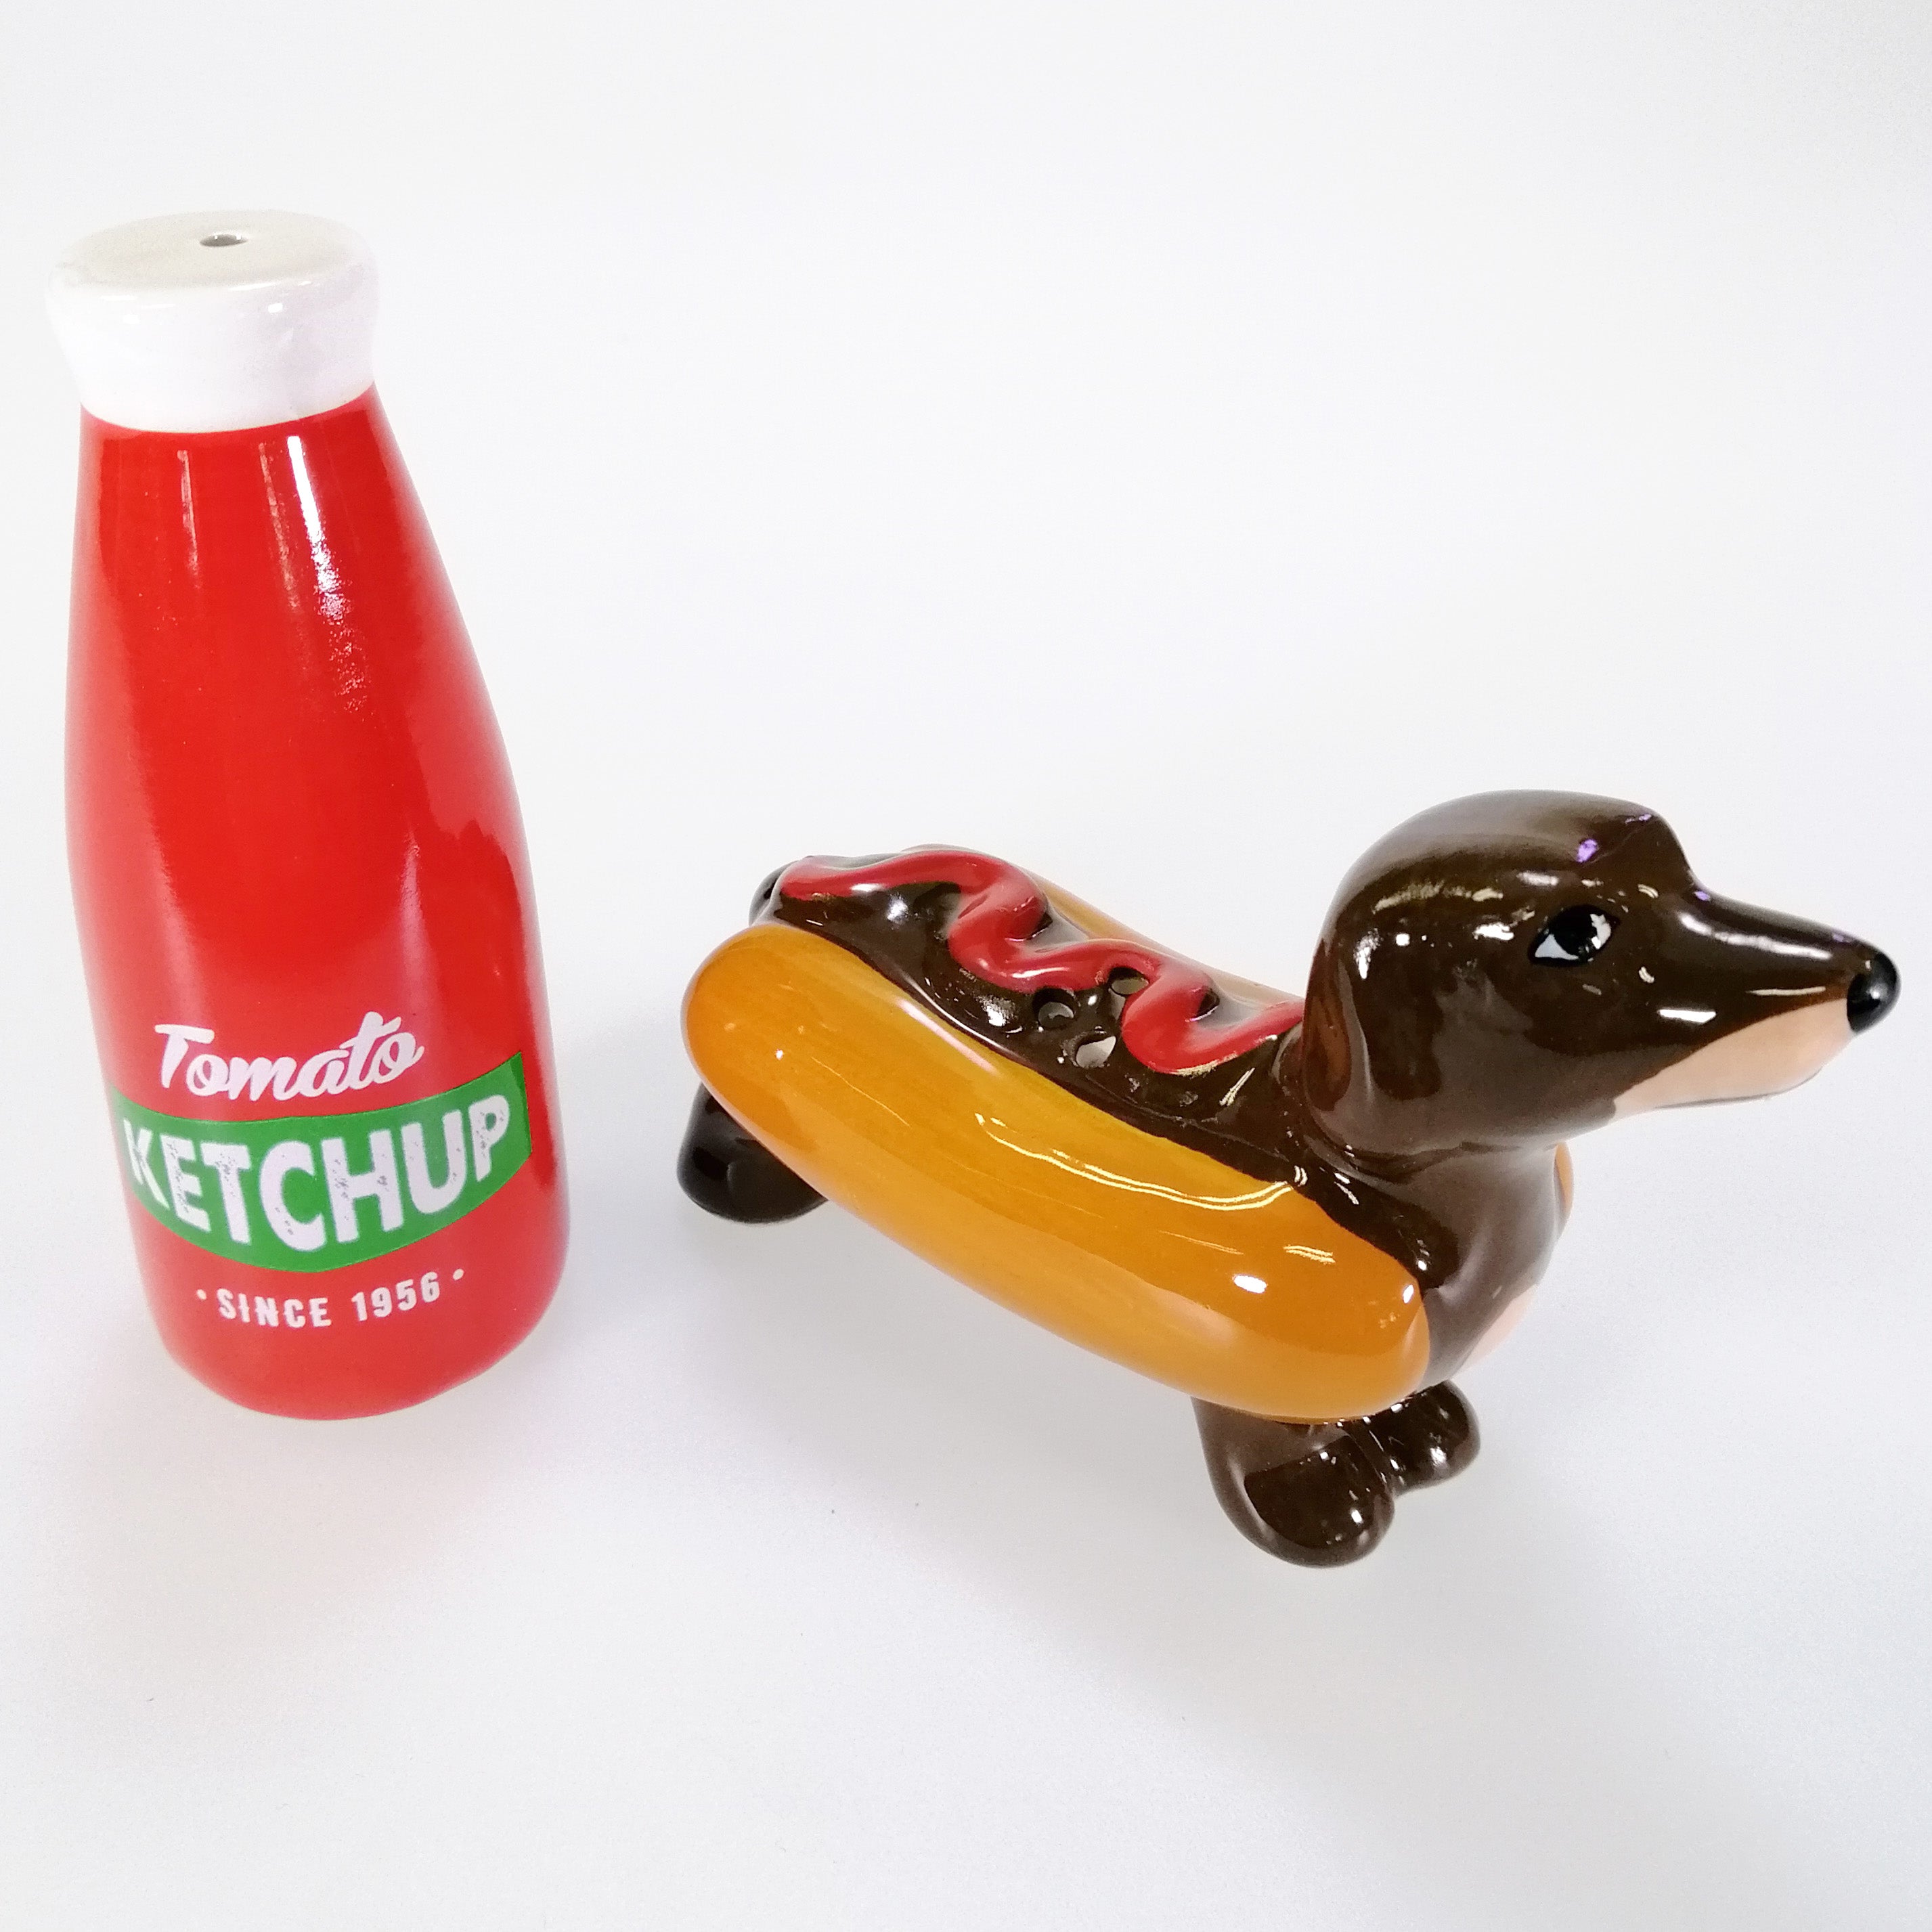 Sausage Dog & Ketchup' Collectible Ceramic Salt & Pepper Set